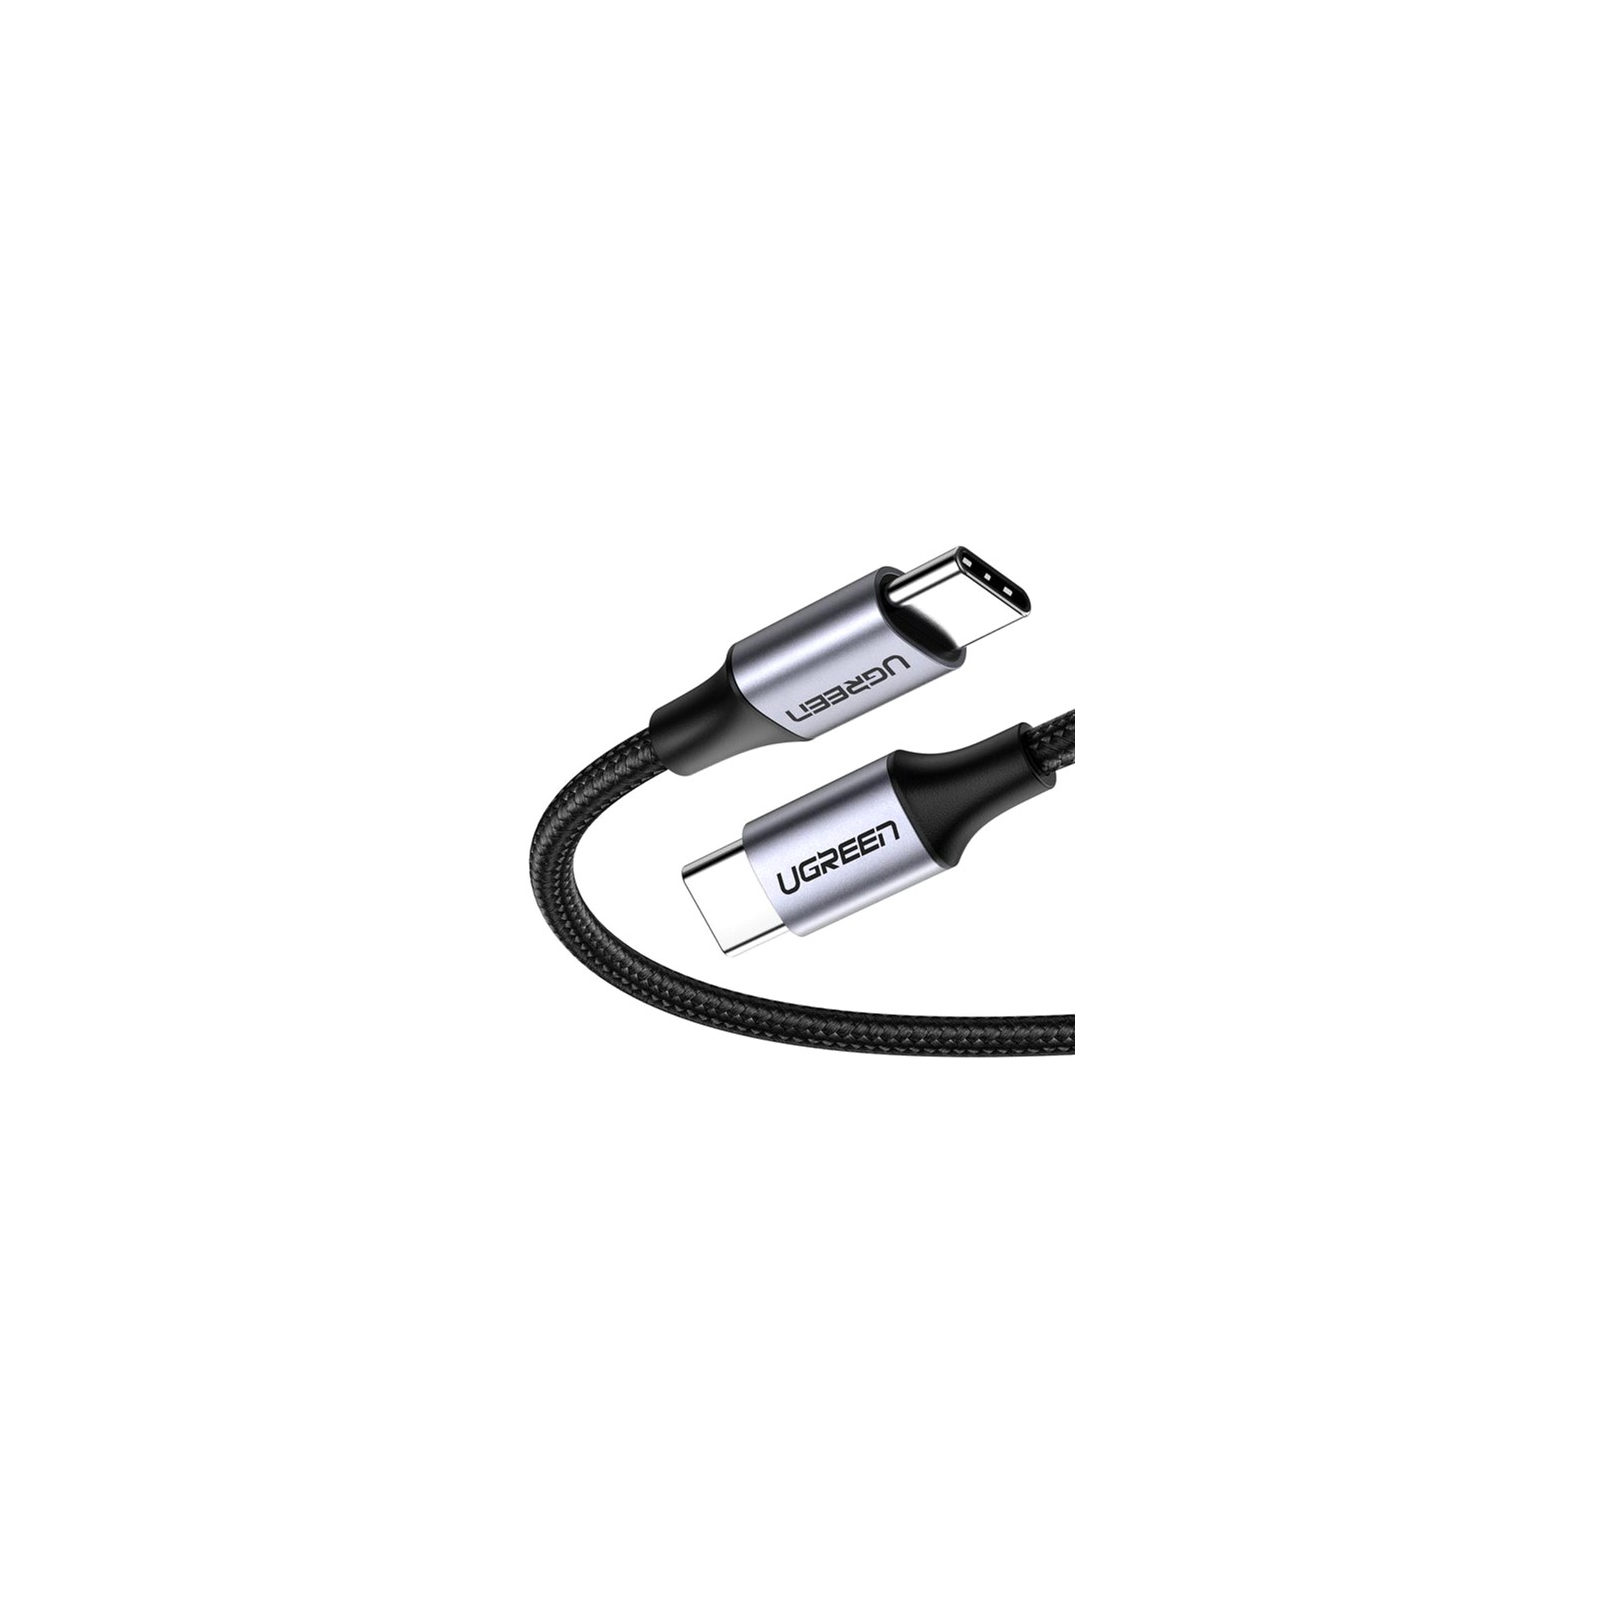 Дата кабель USB-C to USB-C 2.0m US261 18W Round Cable Nickel Plating Aluminum Shell Black Ugreen (50152) зображення 2